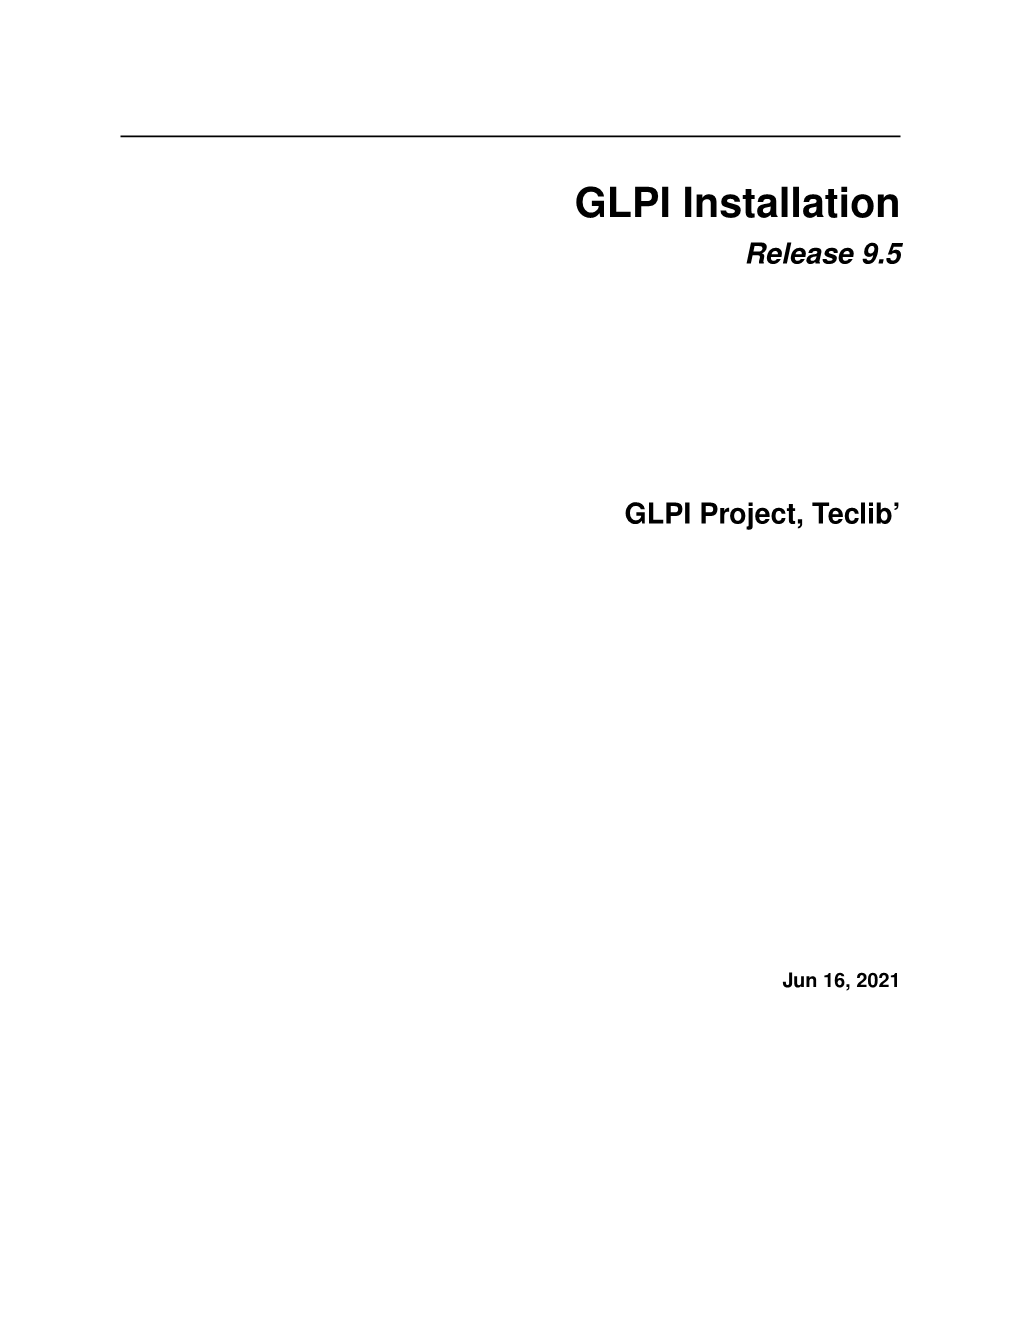 GLPI Installation Release 9.5